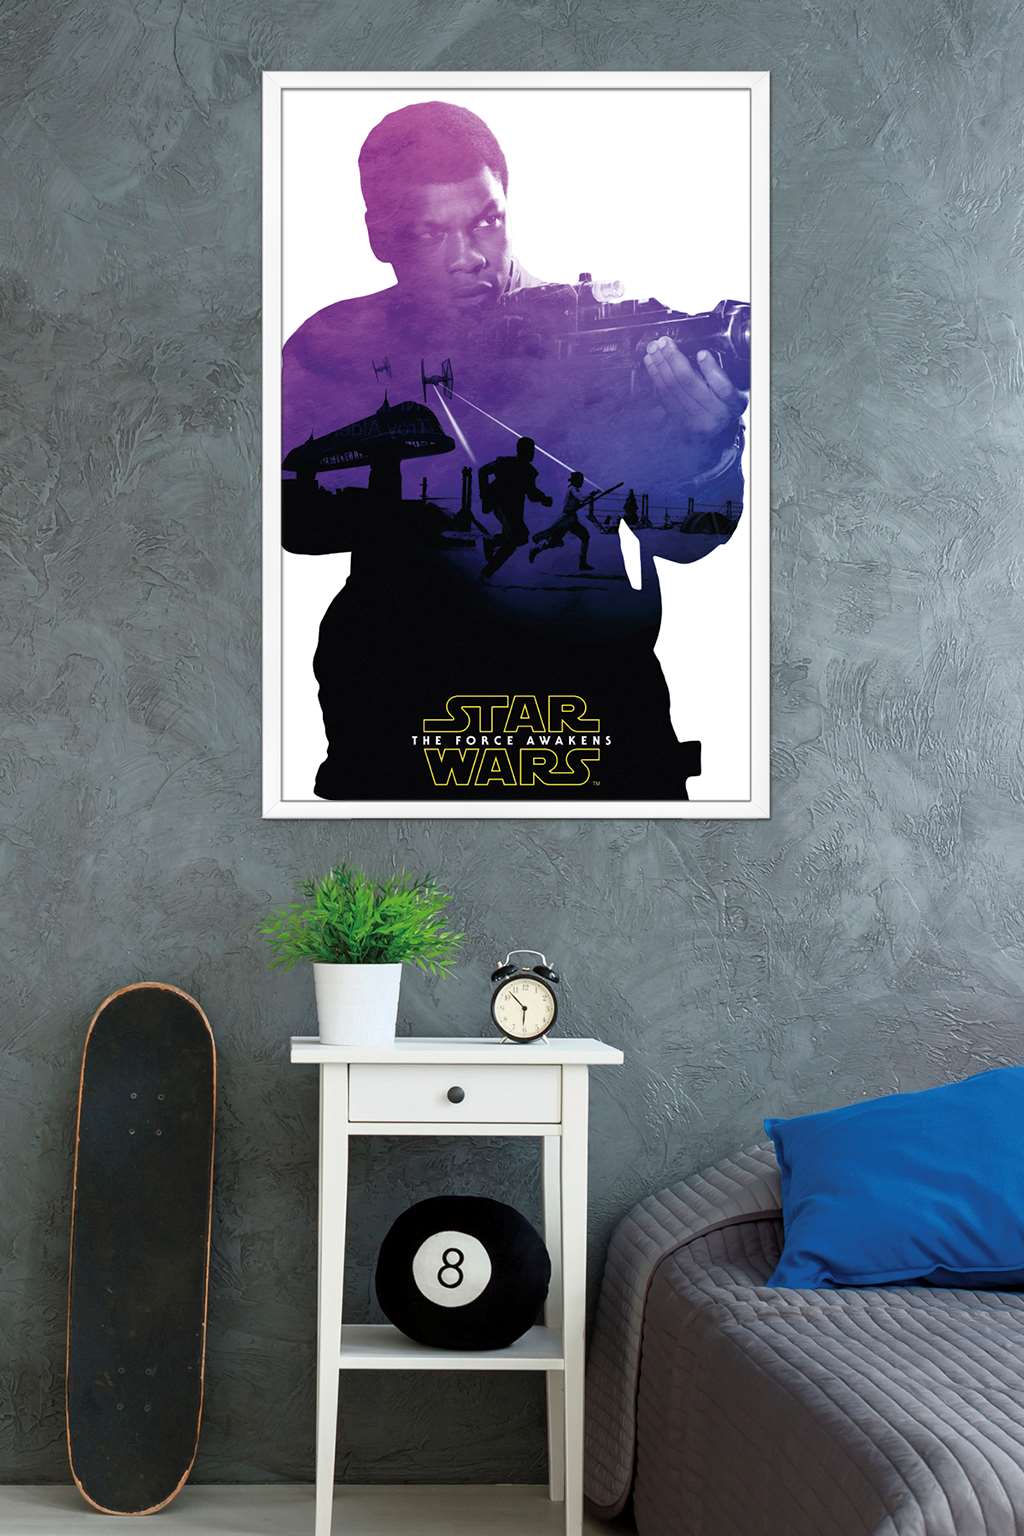 Star Wars: The Force Awakens - Finn Badge Wall Poster, 22.375" x 34", Framed - image 2 of 2